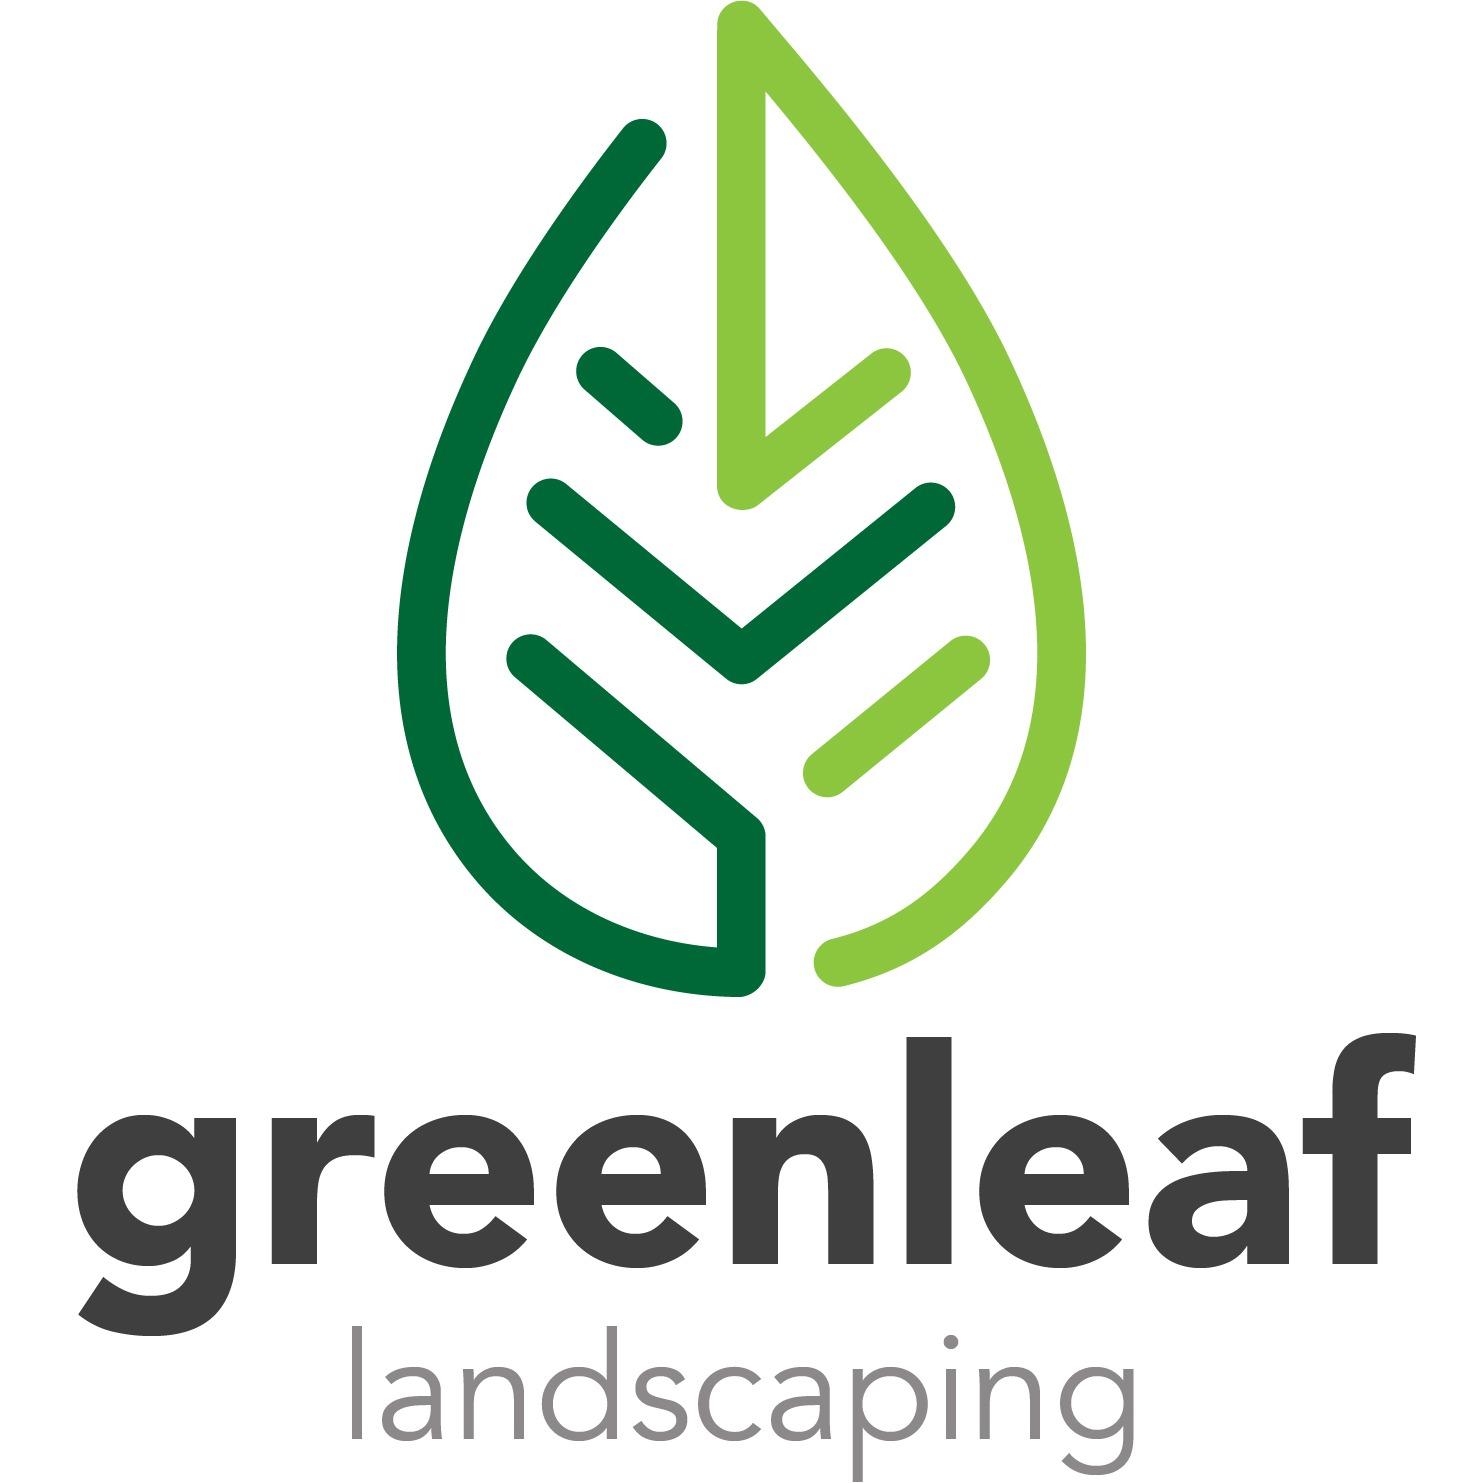 Greenleaf Landscaping - Natick, MA 01760 - (774)421-9570 | ShowMeLocal.com